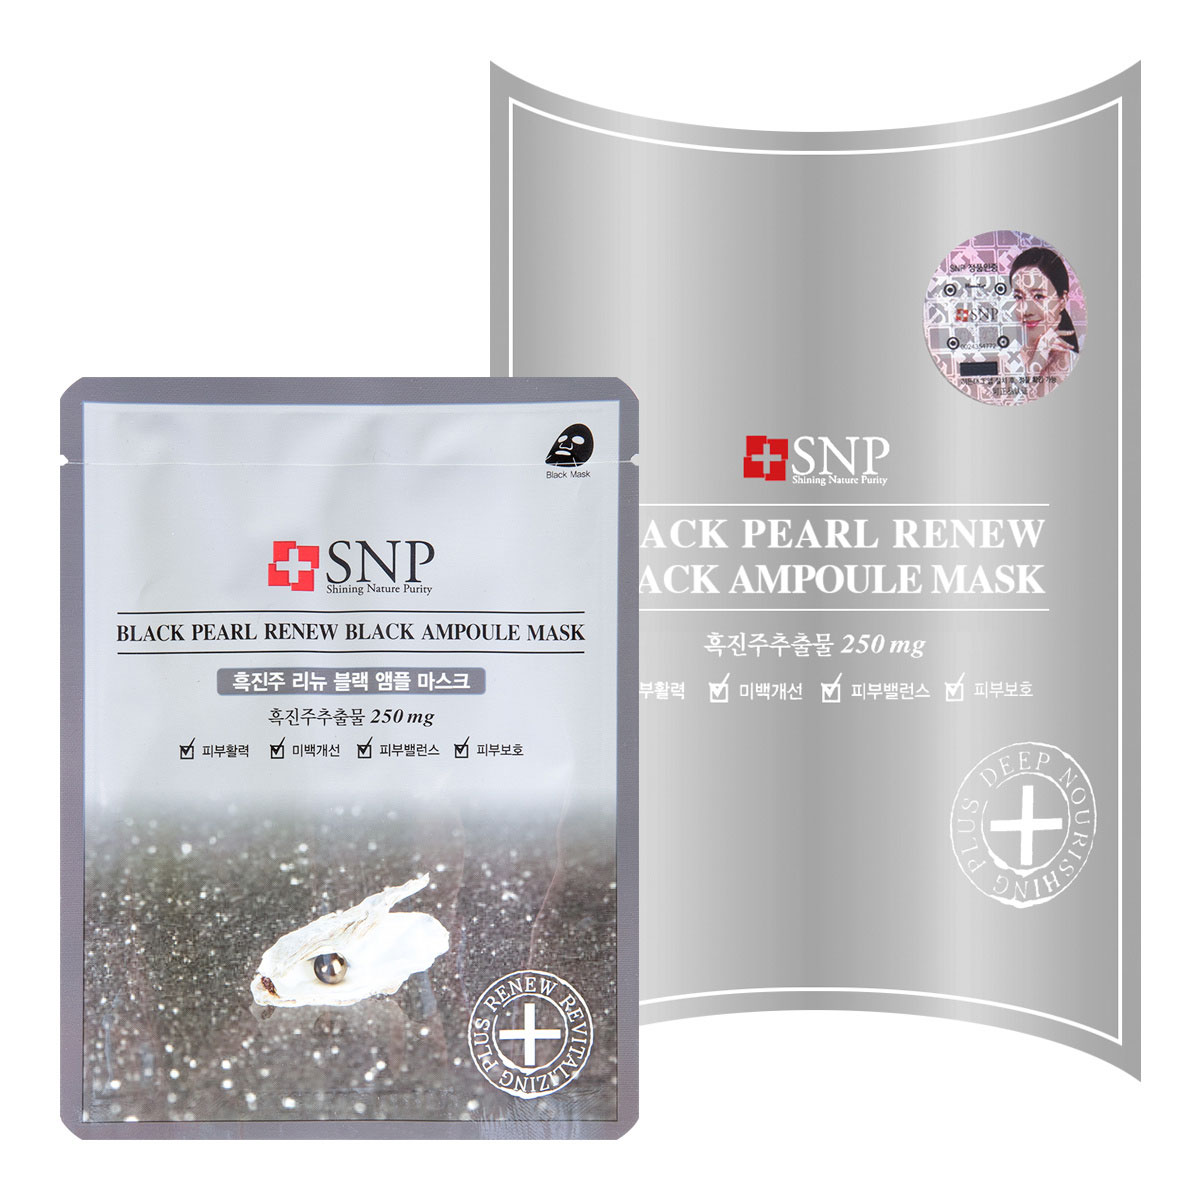 SNP Black Pearl Renew Black Ampoule Mask (10piece)